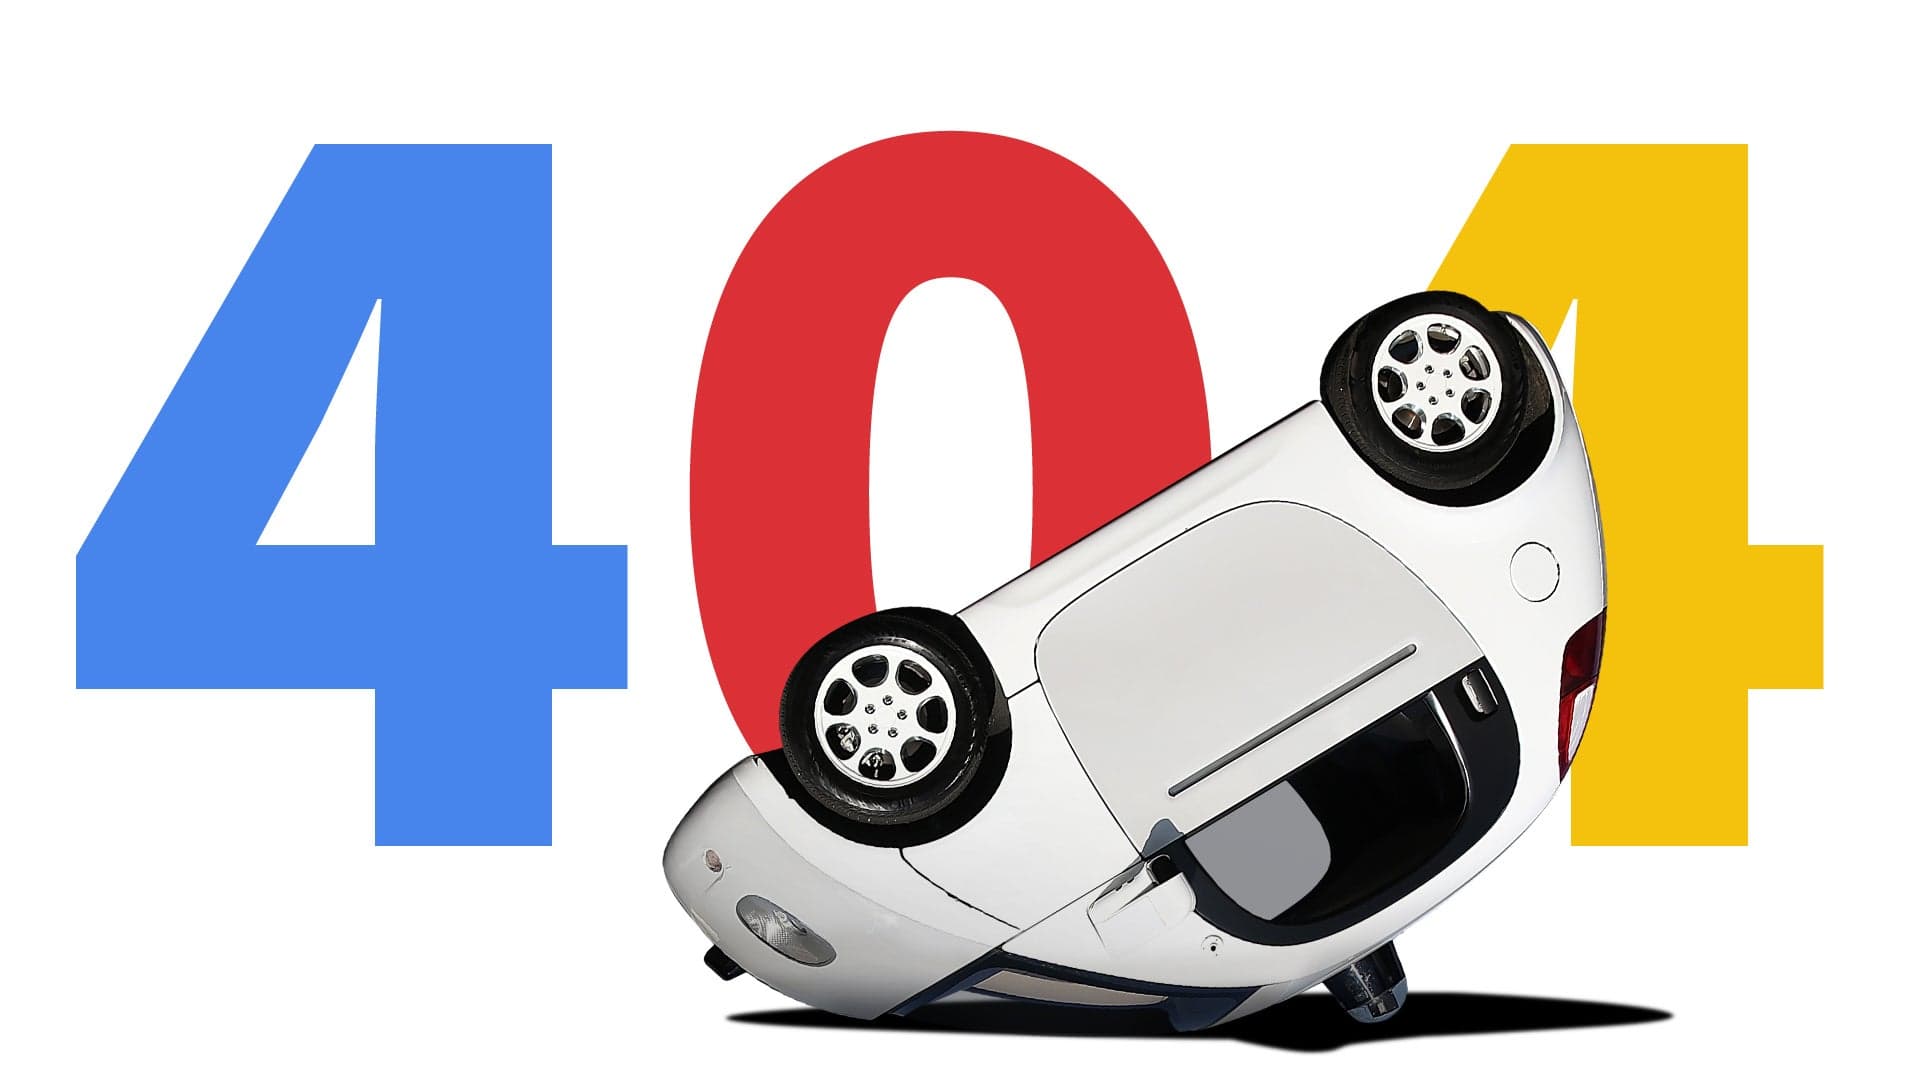 The Google Car Is a Hoax